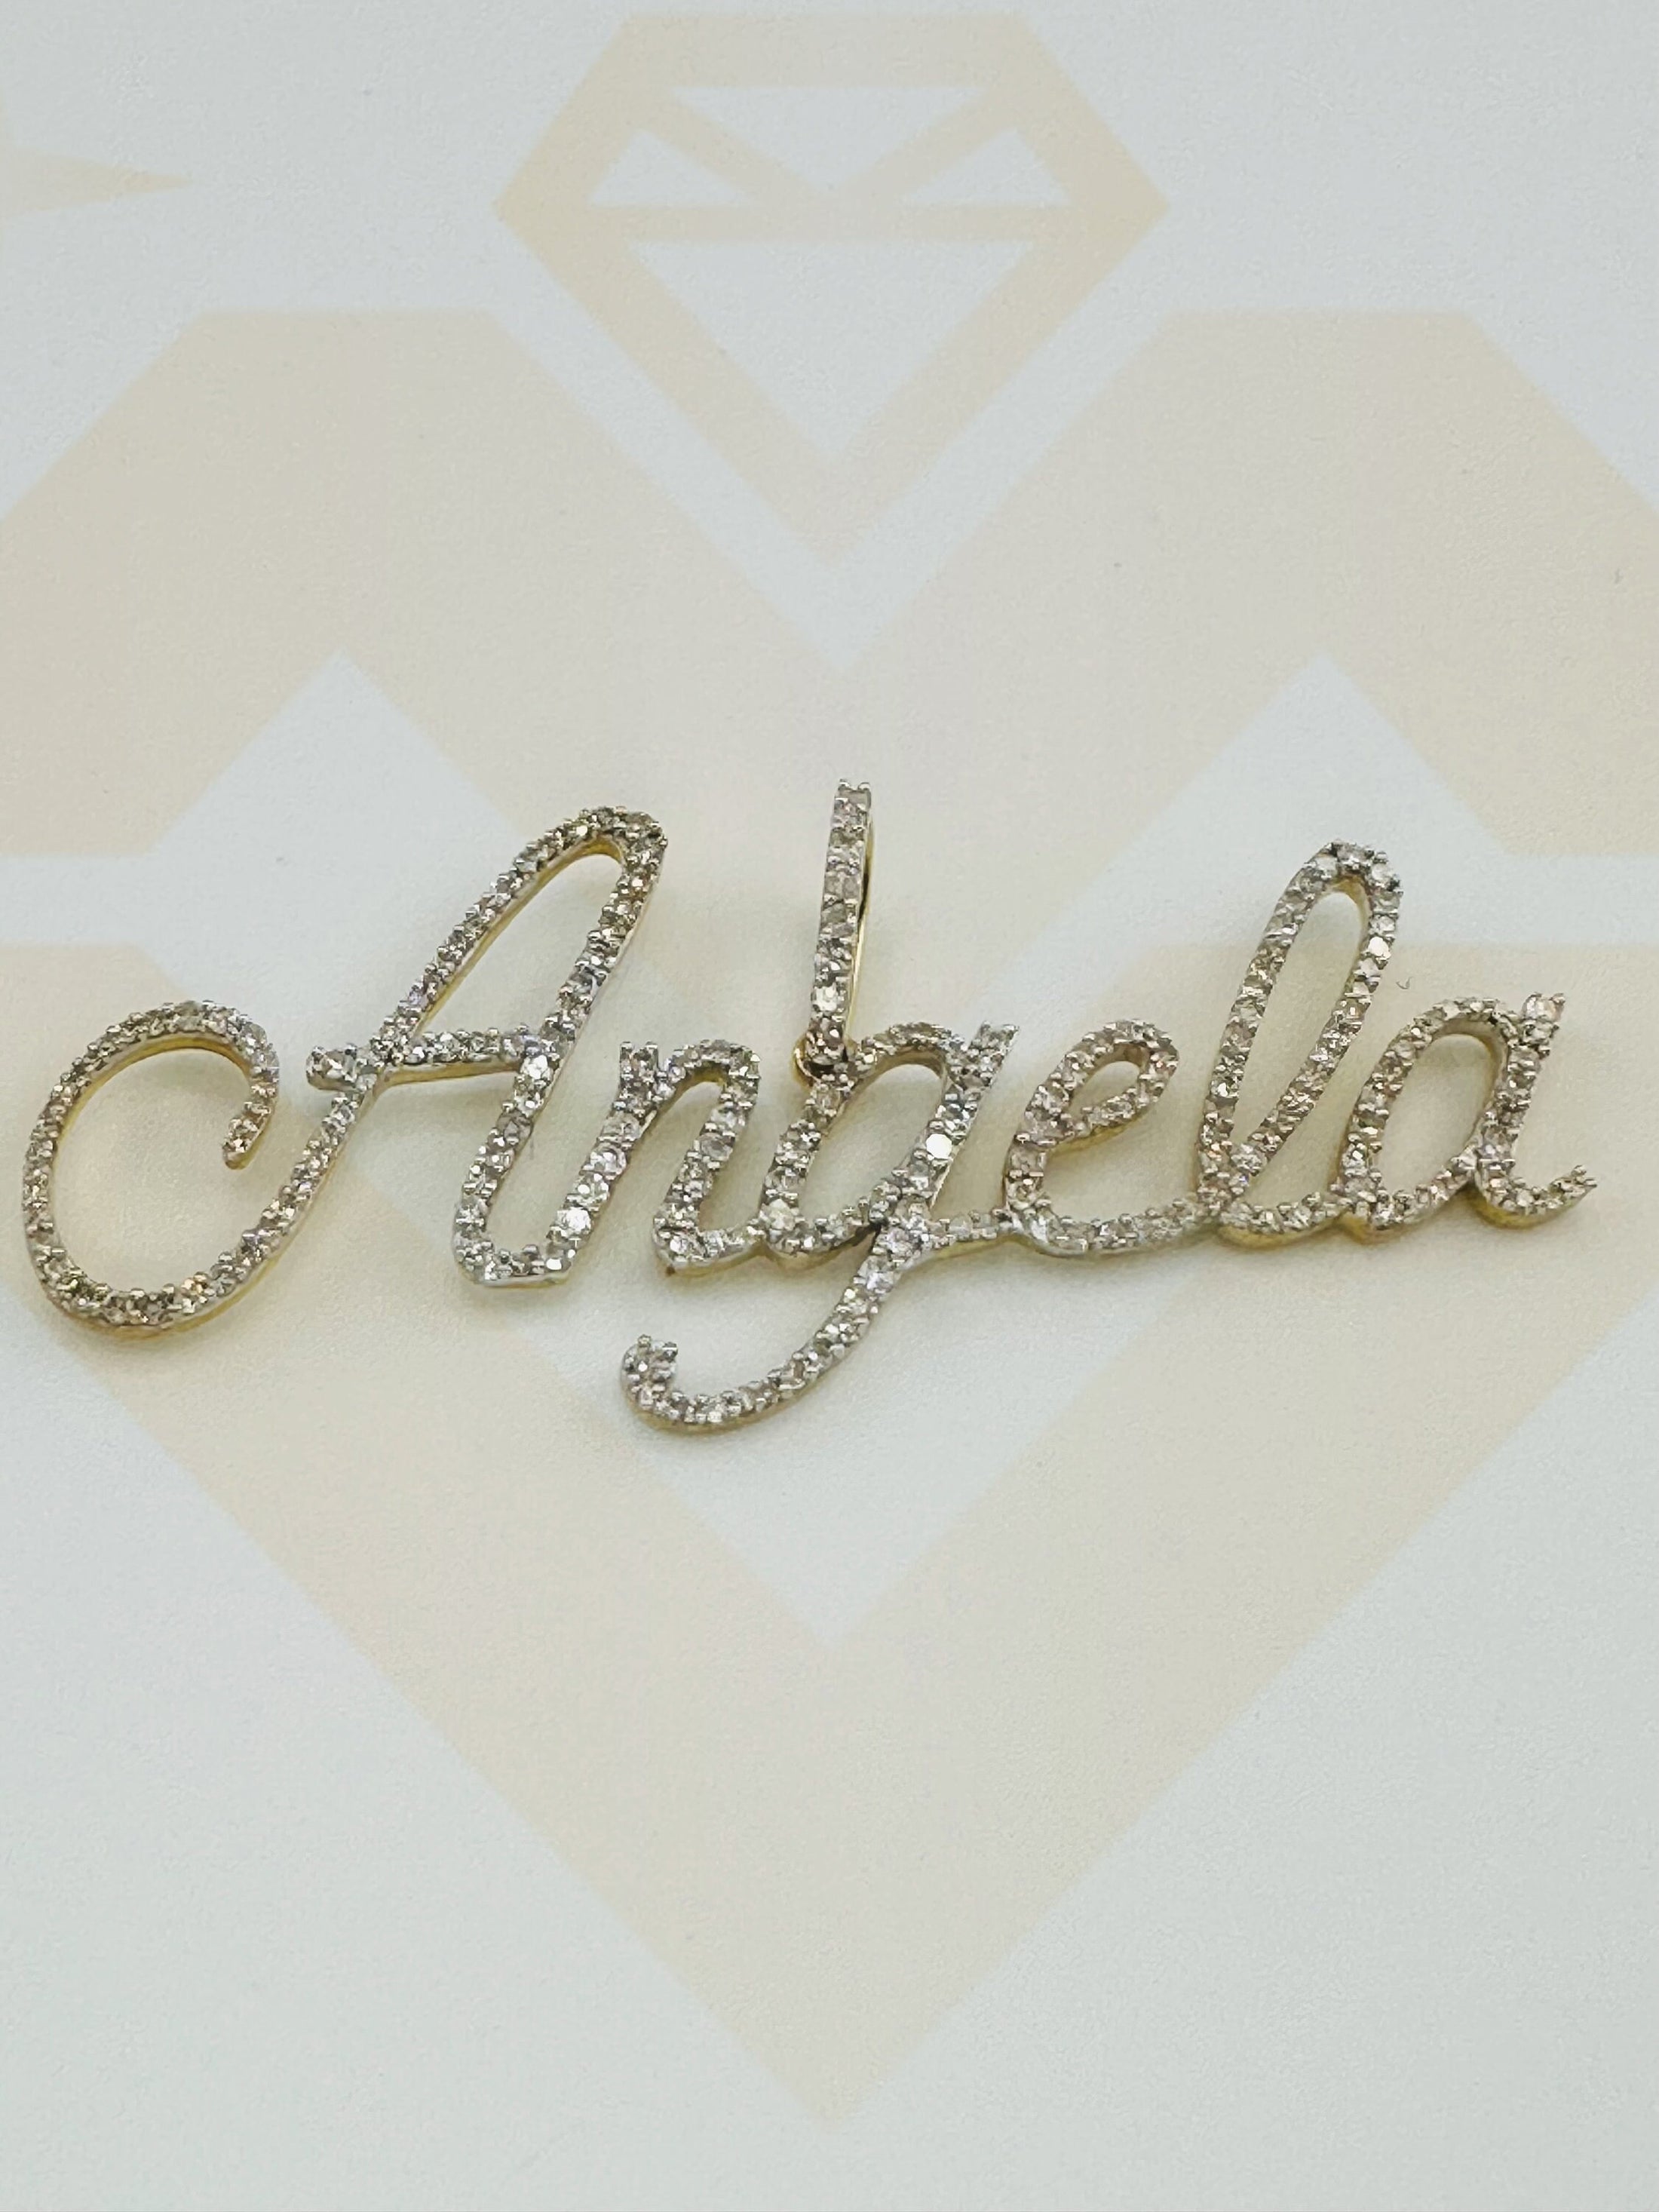 10k solid gold Real Diamond Angela name pendant, personalized name pendant, custom jewelry, FREE Appraisal, Birthday Christmas Anniversary